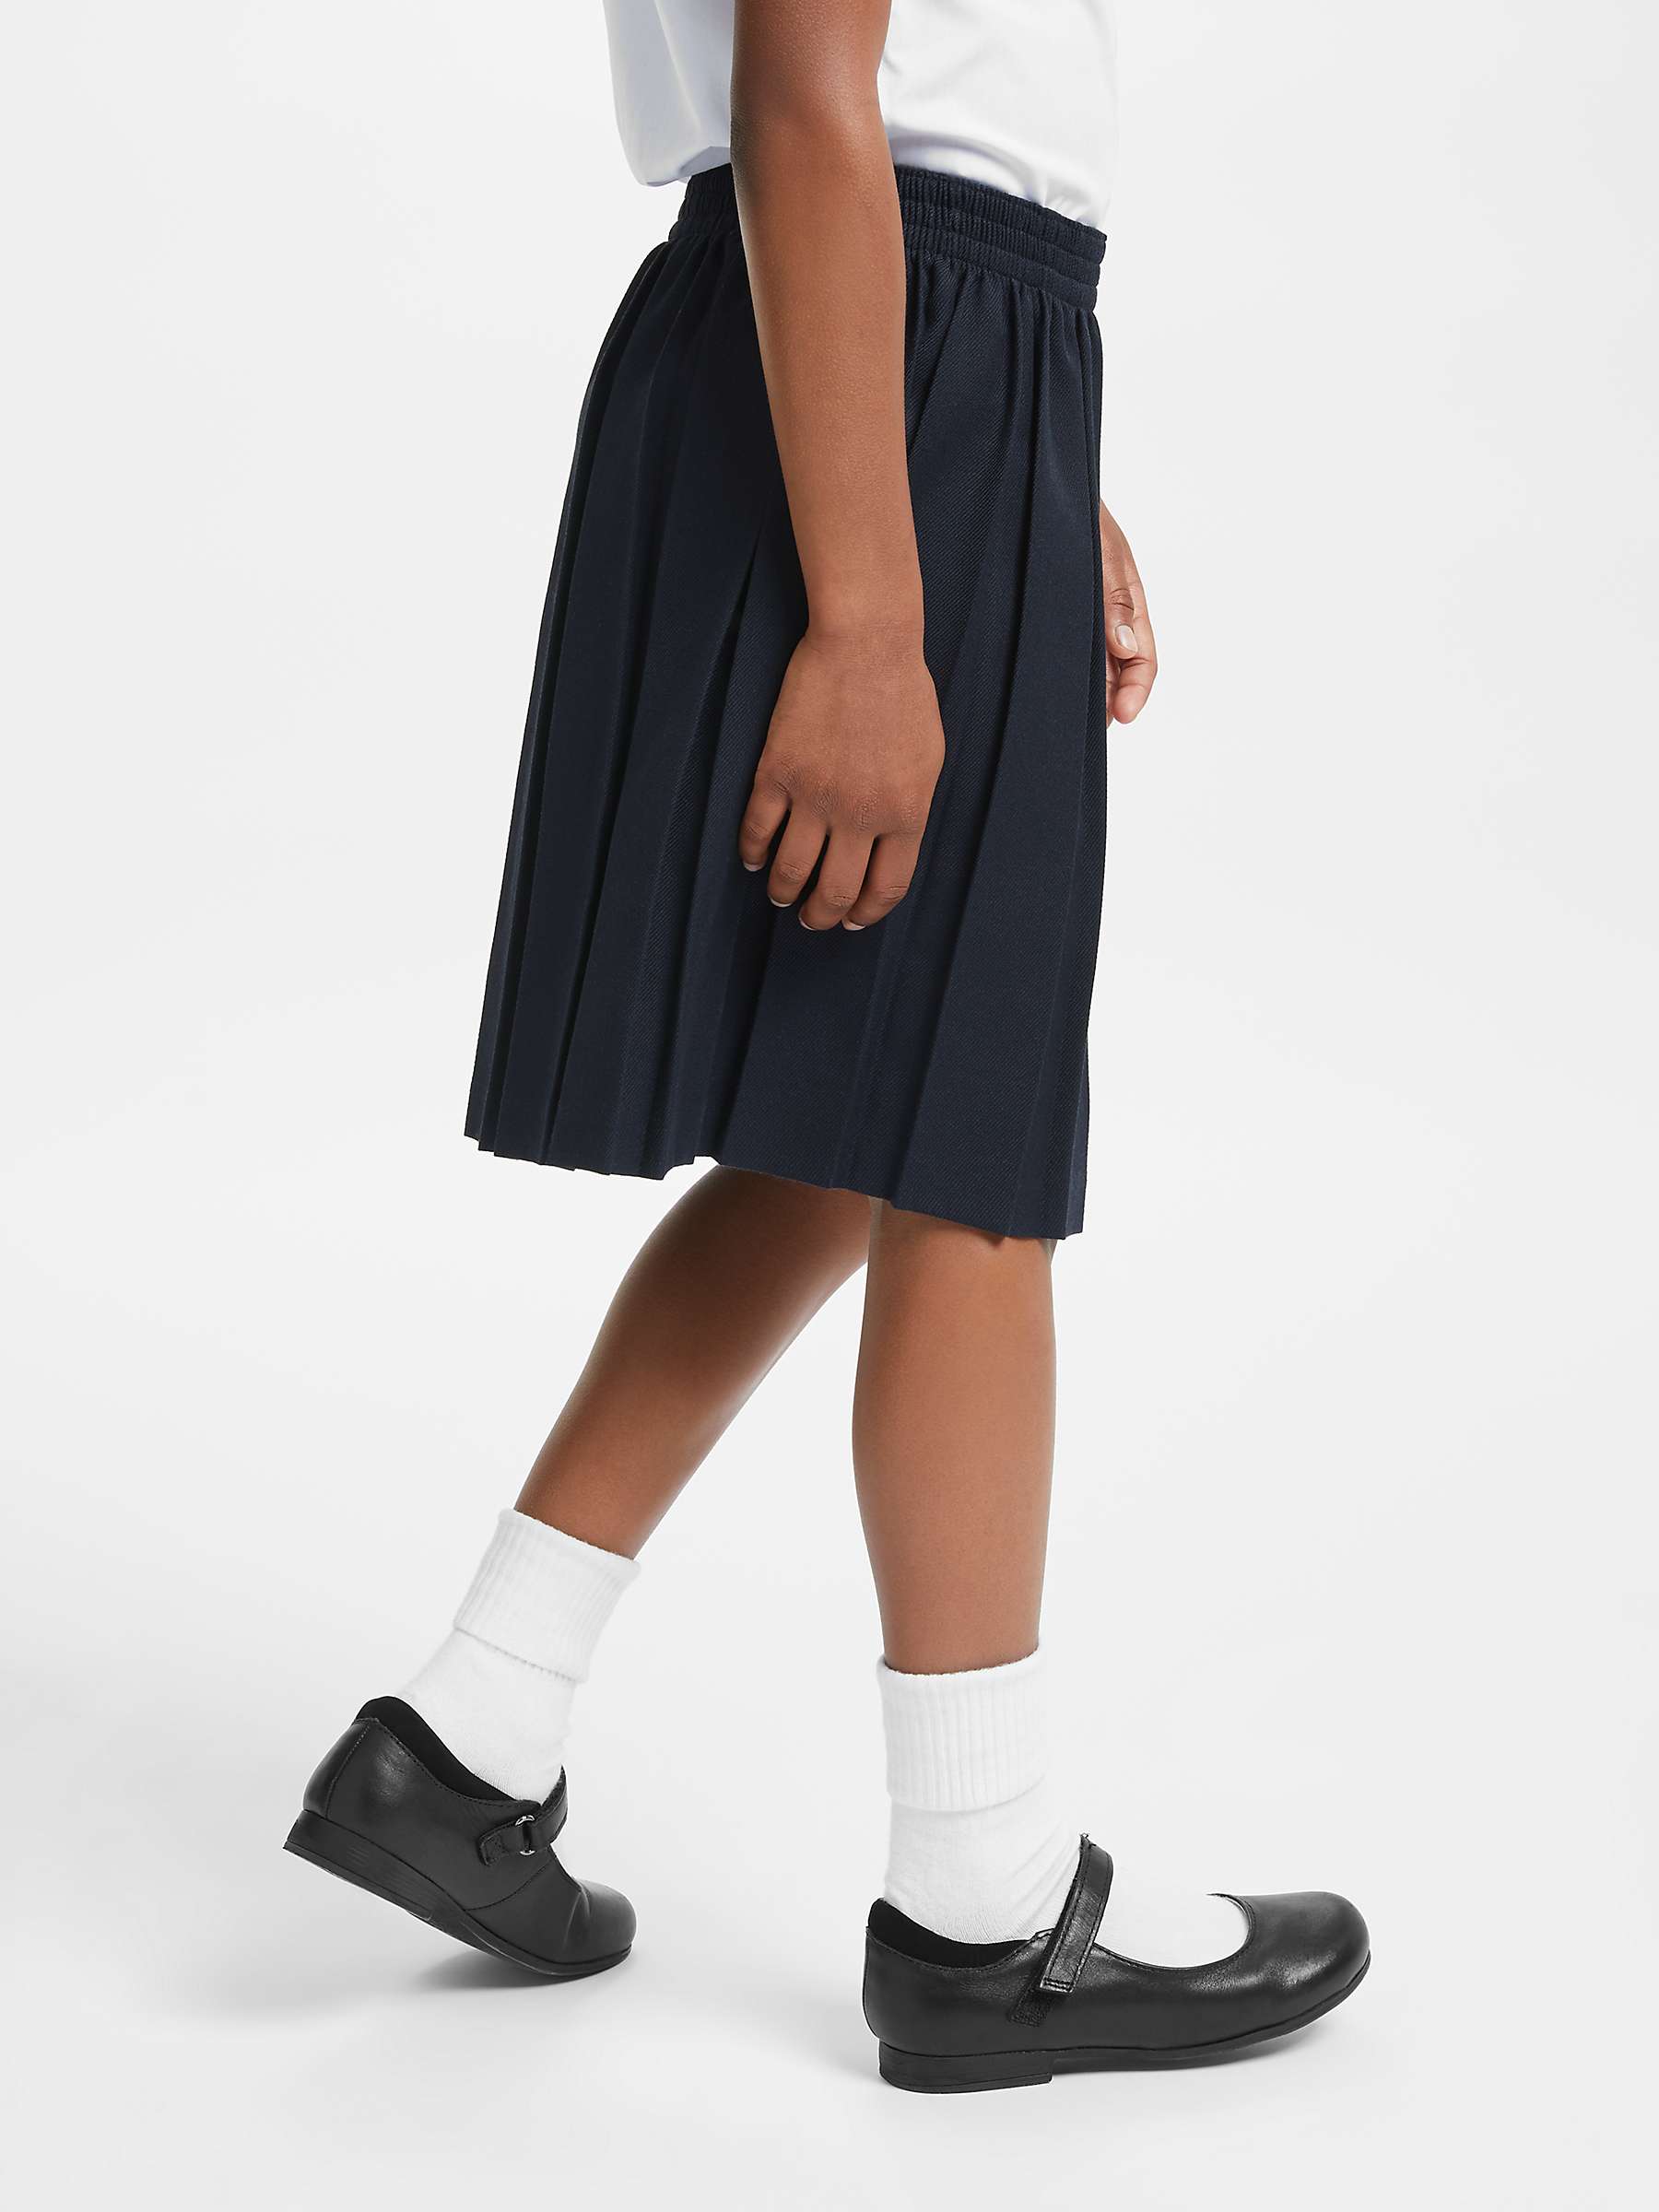 Buy John Lewis Girls' Pleated School Skirt Online at johnlewis.com